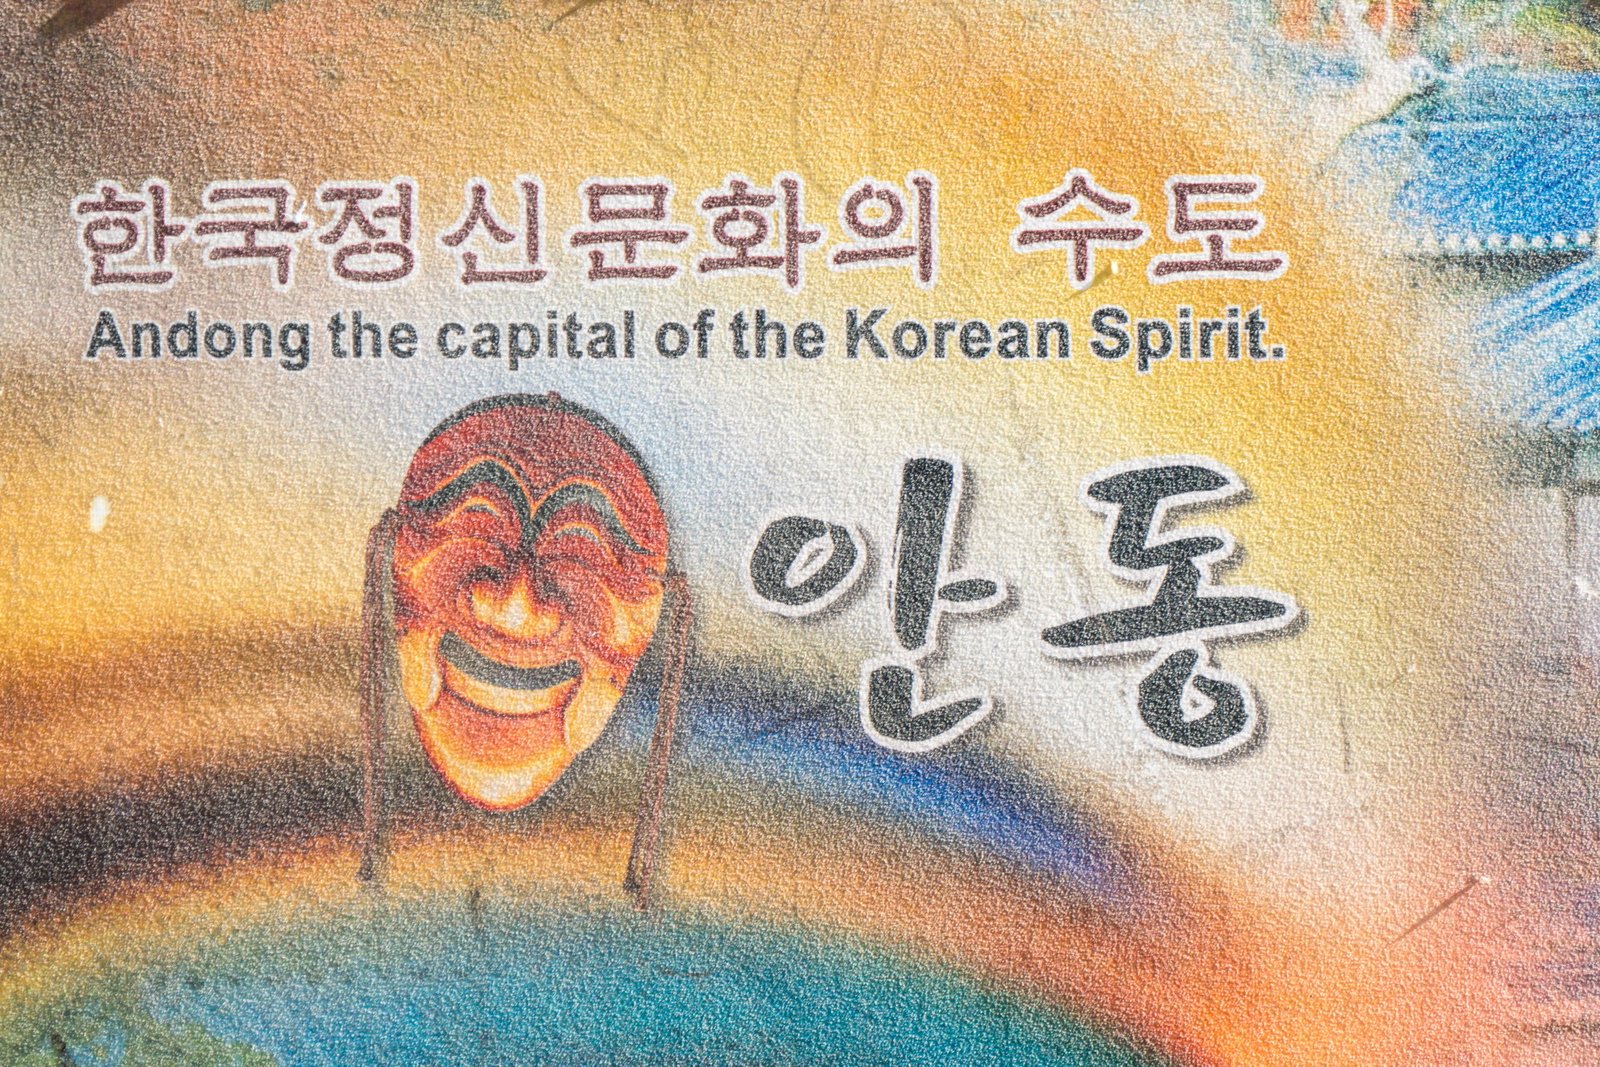 andong capital of the korean spirit coree du sud